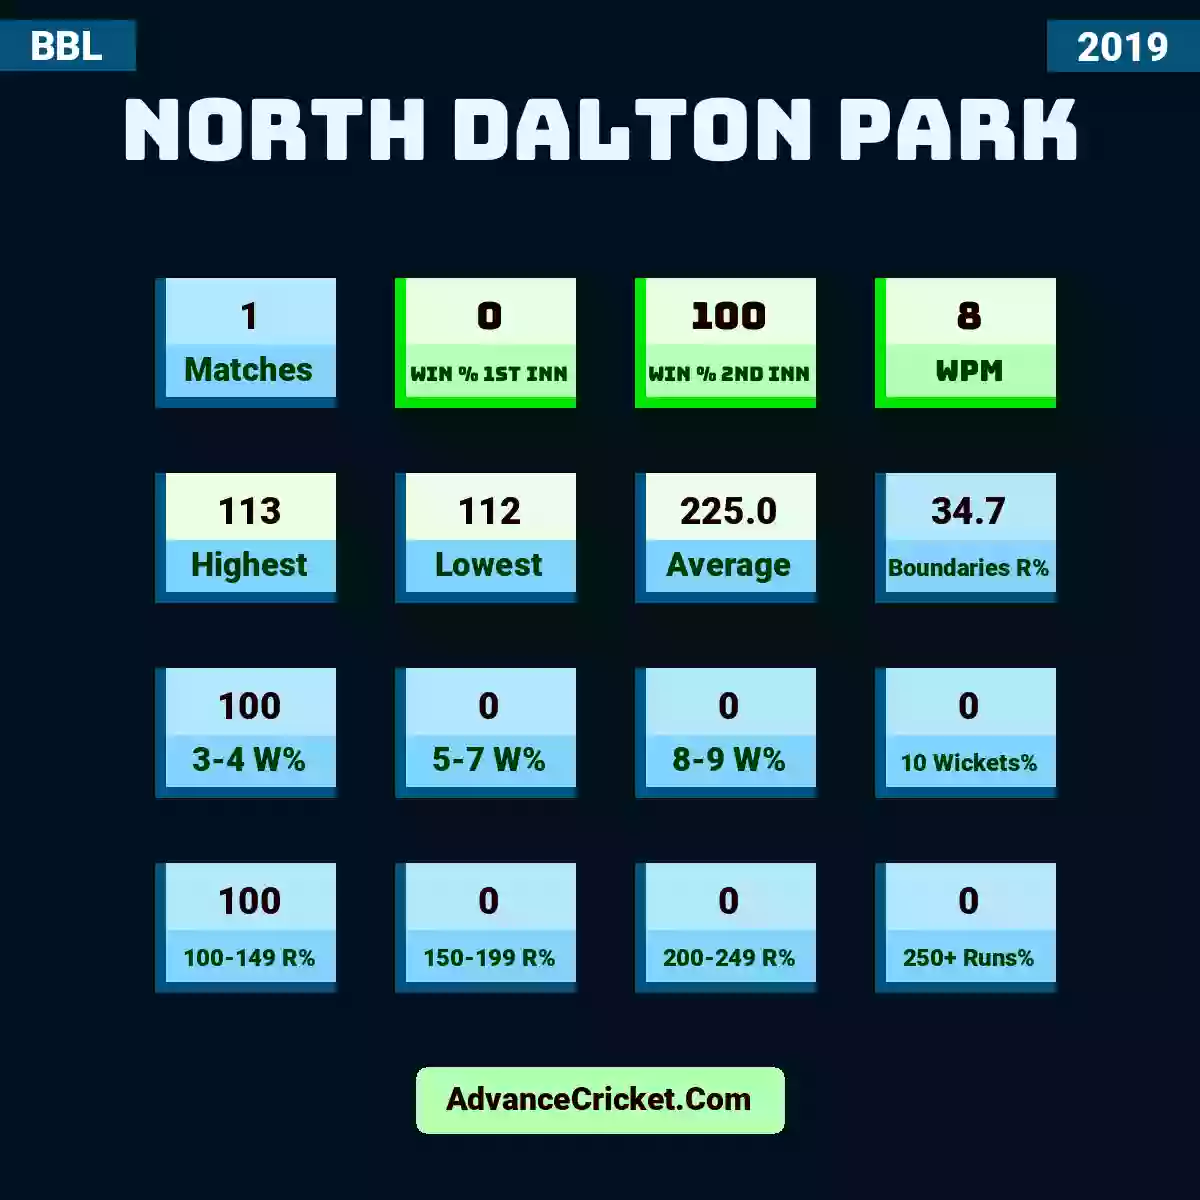 Image showing North Dalton Park with Matches: 1, Win % 1st Inn: 0, Win % 2nd Inn: 100, WPM: 8, Highest: 113, Lowest: 112, Average: 225.0, Boundaries R%: 34.7, 3-4 W%: 100, 5-7 W%: 0, 8-9 W%: 0, 10 Wickets%: 0, 100-149 R%: 100, 150-199 R%: 0, 200-249 R%: 0, 250+ Runs%: 0.